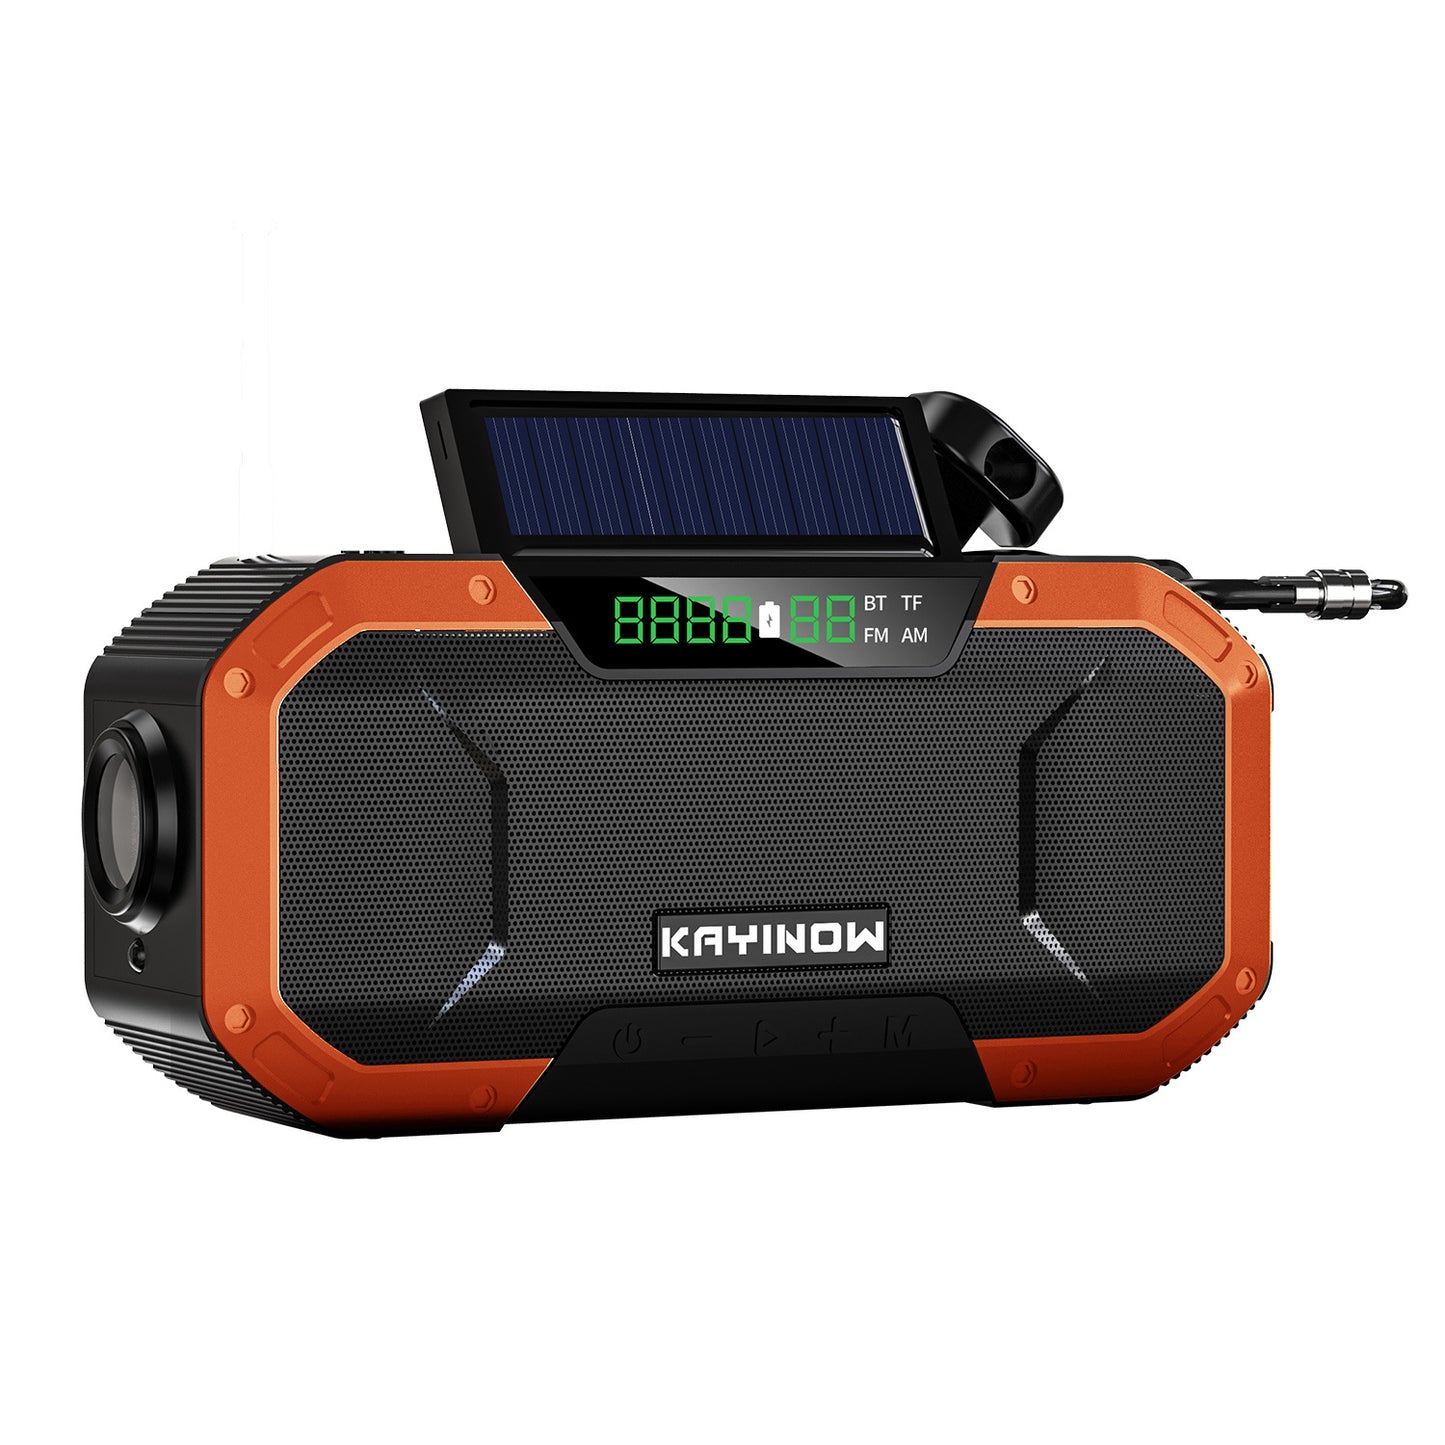 Solar-powered hand radio